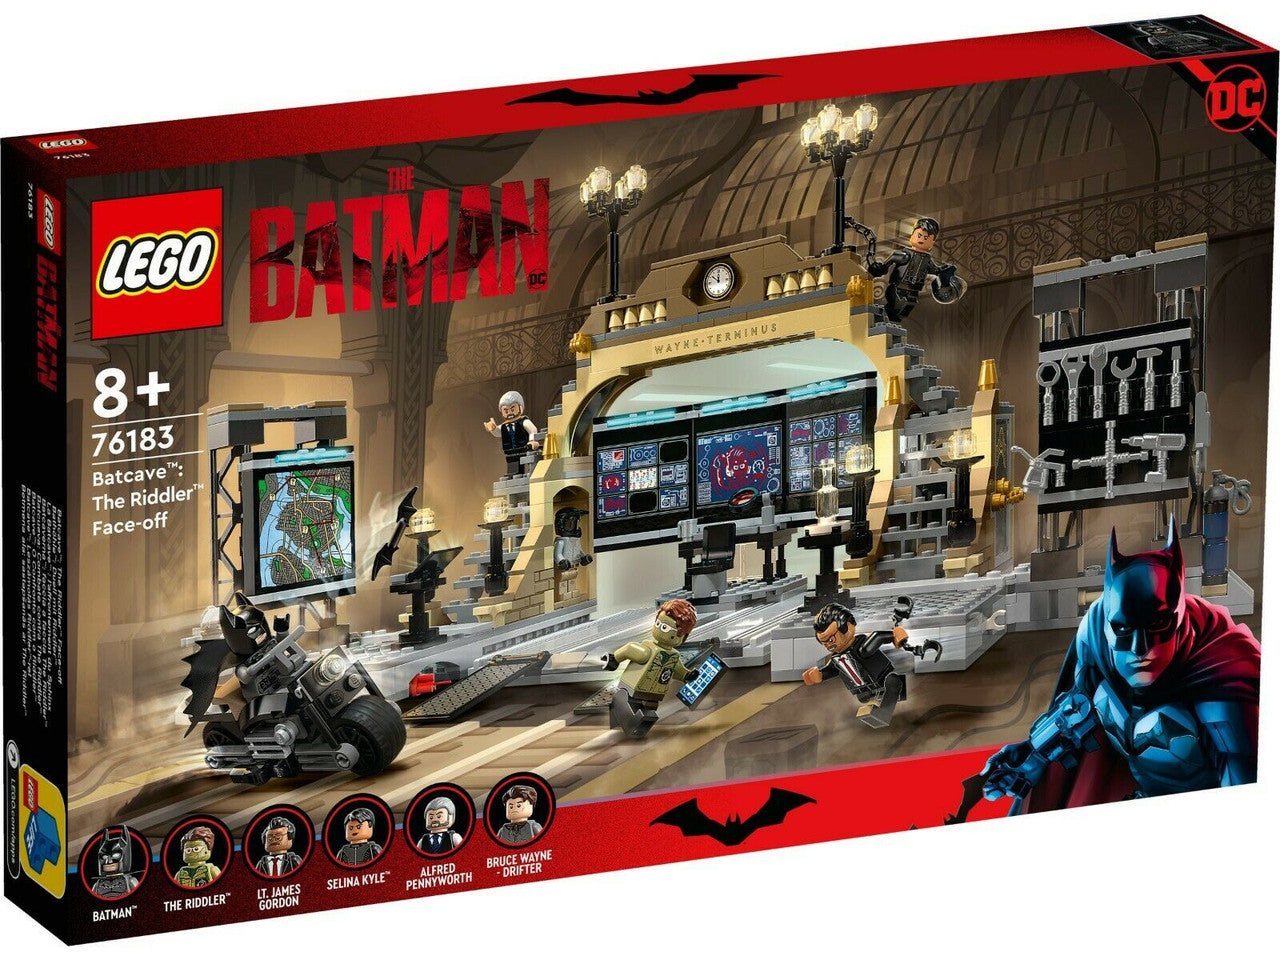 LEGO DC Super Heroes Batcave: The Riddler Face-off 76183